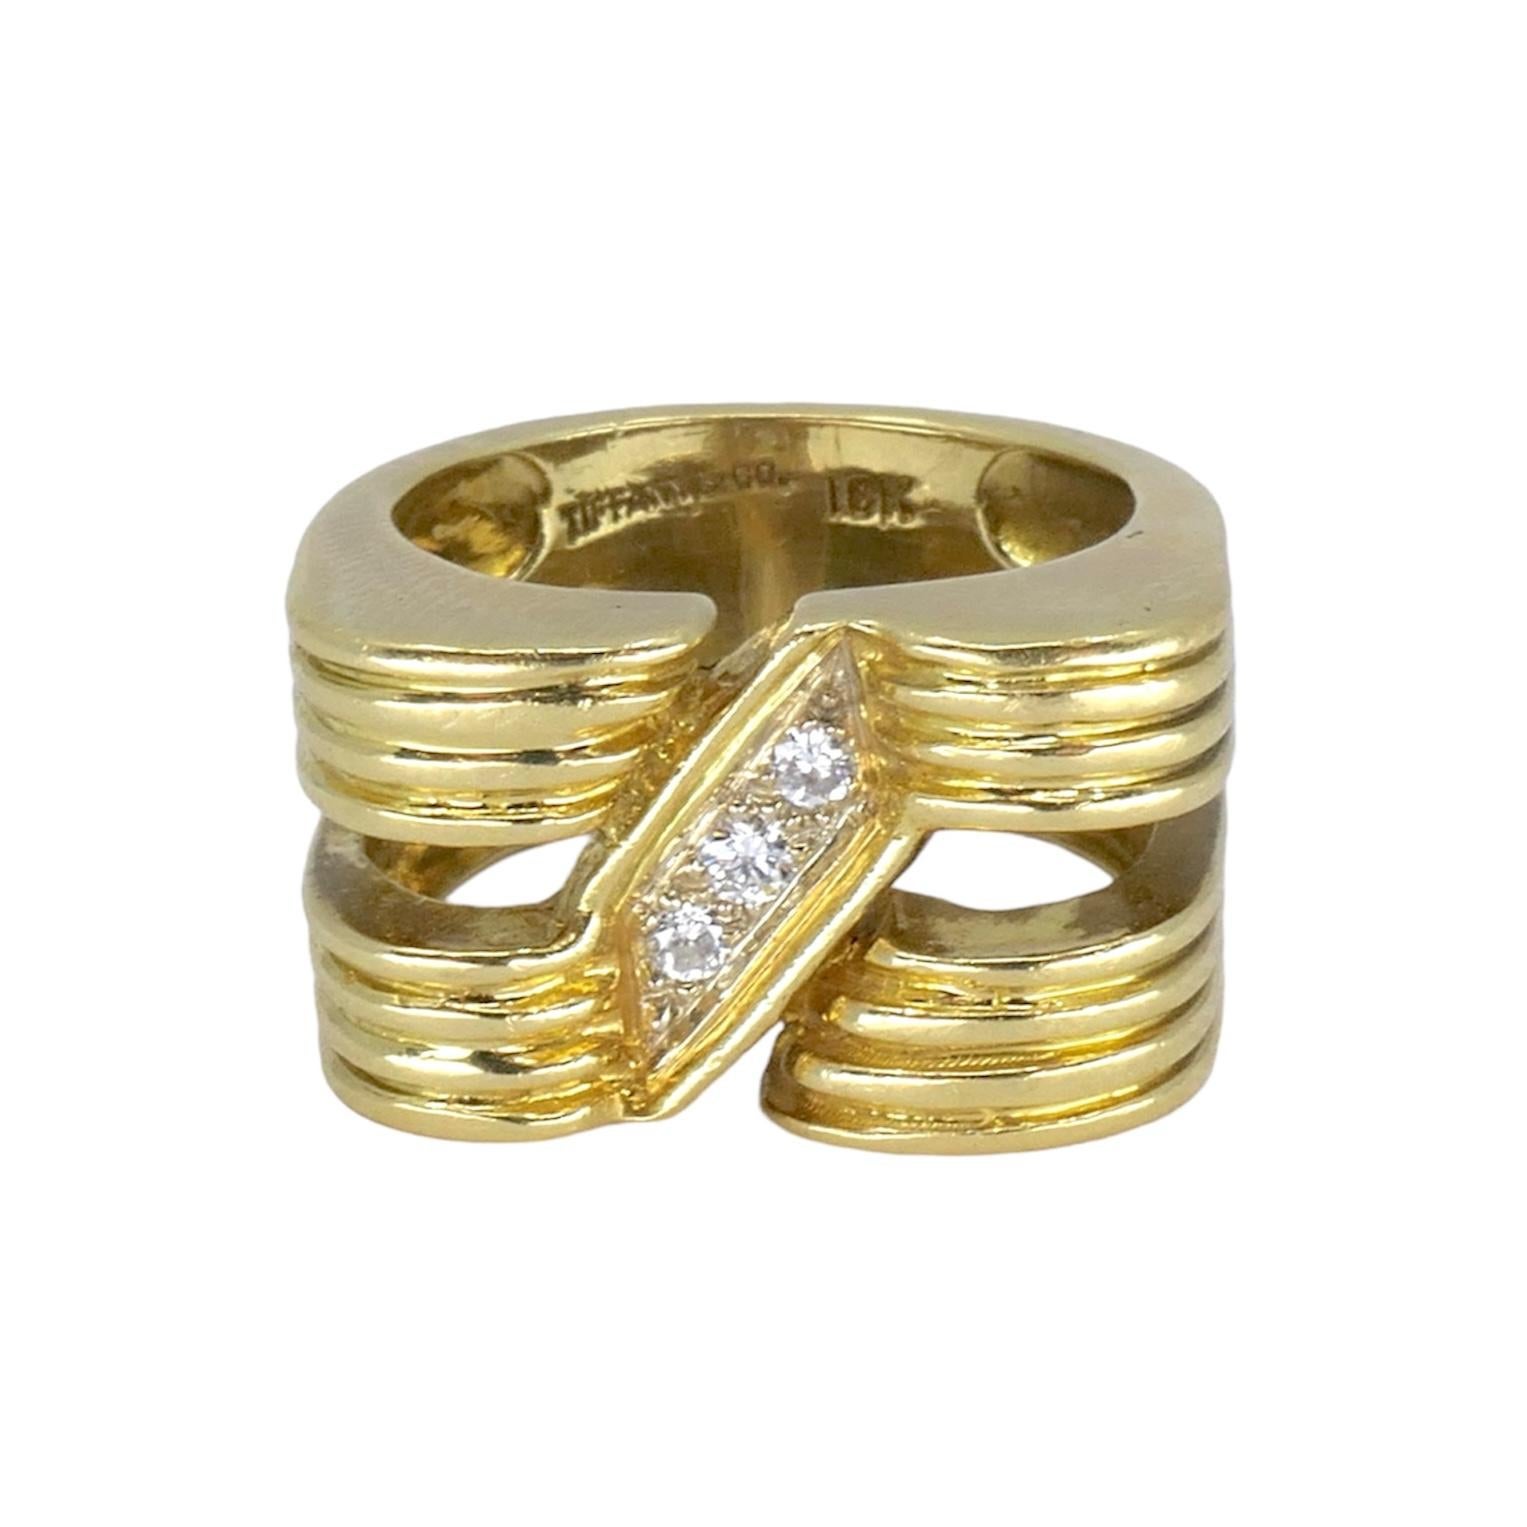 DESIGNER: Tiffany & Co.
CIRCA: 1970’s
MATERIALS: 18K Yellow Gold
GEMSTONE: 3 brilliant cut Diamonds
WEIGHT: 16.2 grams
RING SIZE: 7.5
HALLMARKS: TIFFANY & CO; 18K

The 